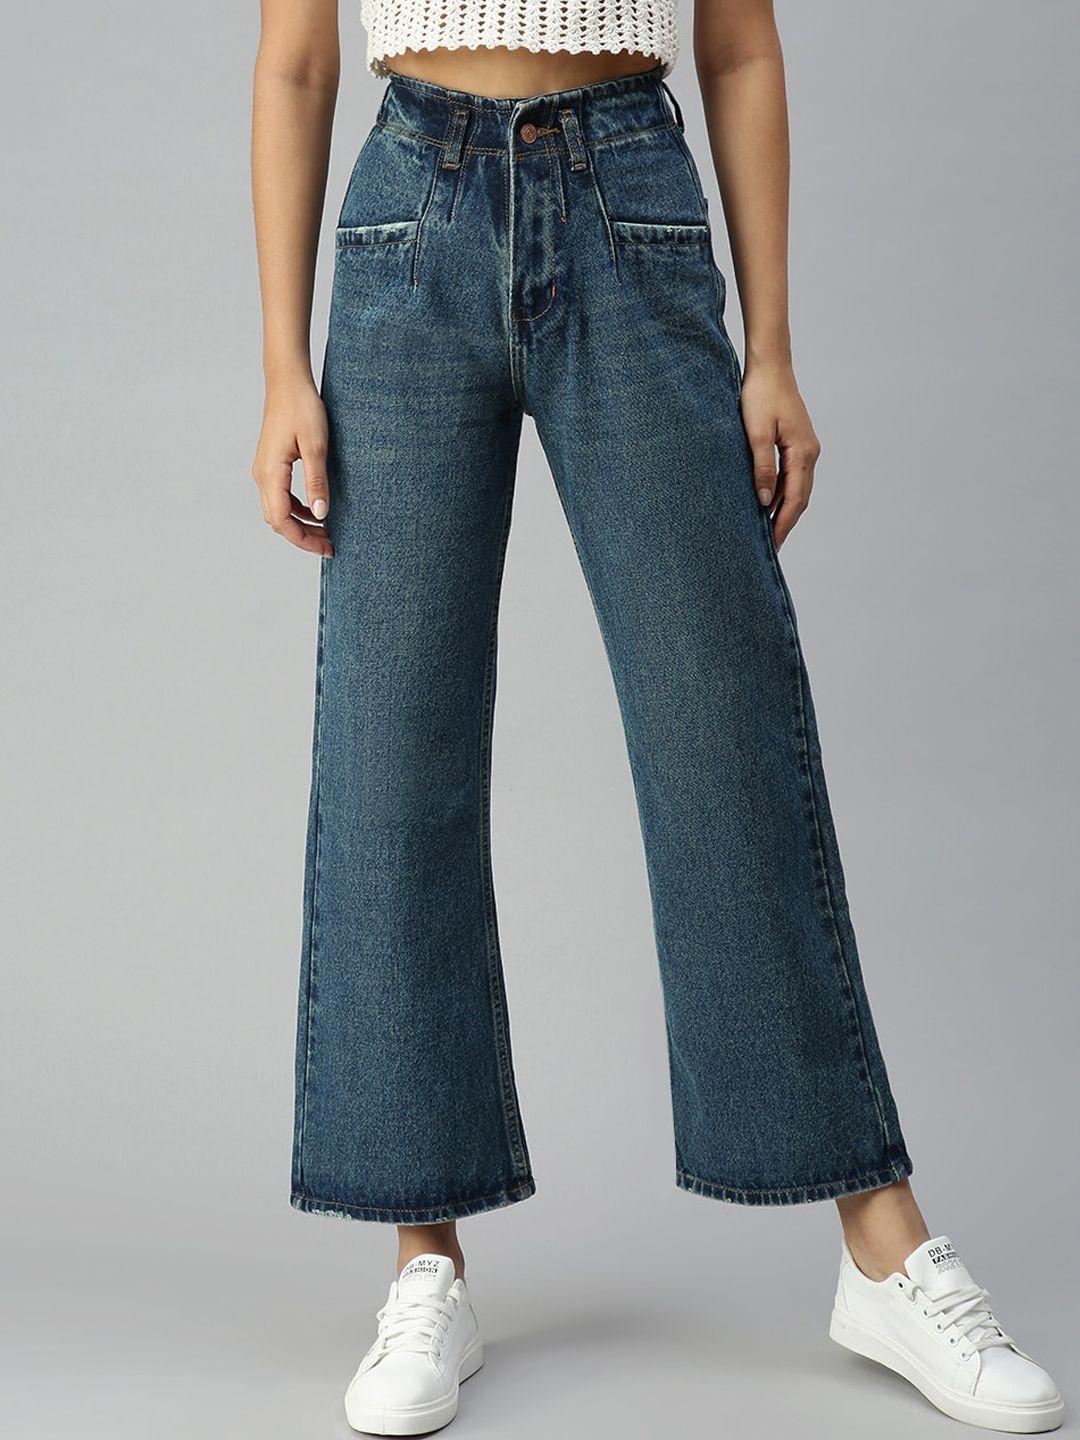 showoff-women-blue-jean-wide-leg-high-rise-light-fade-jeans